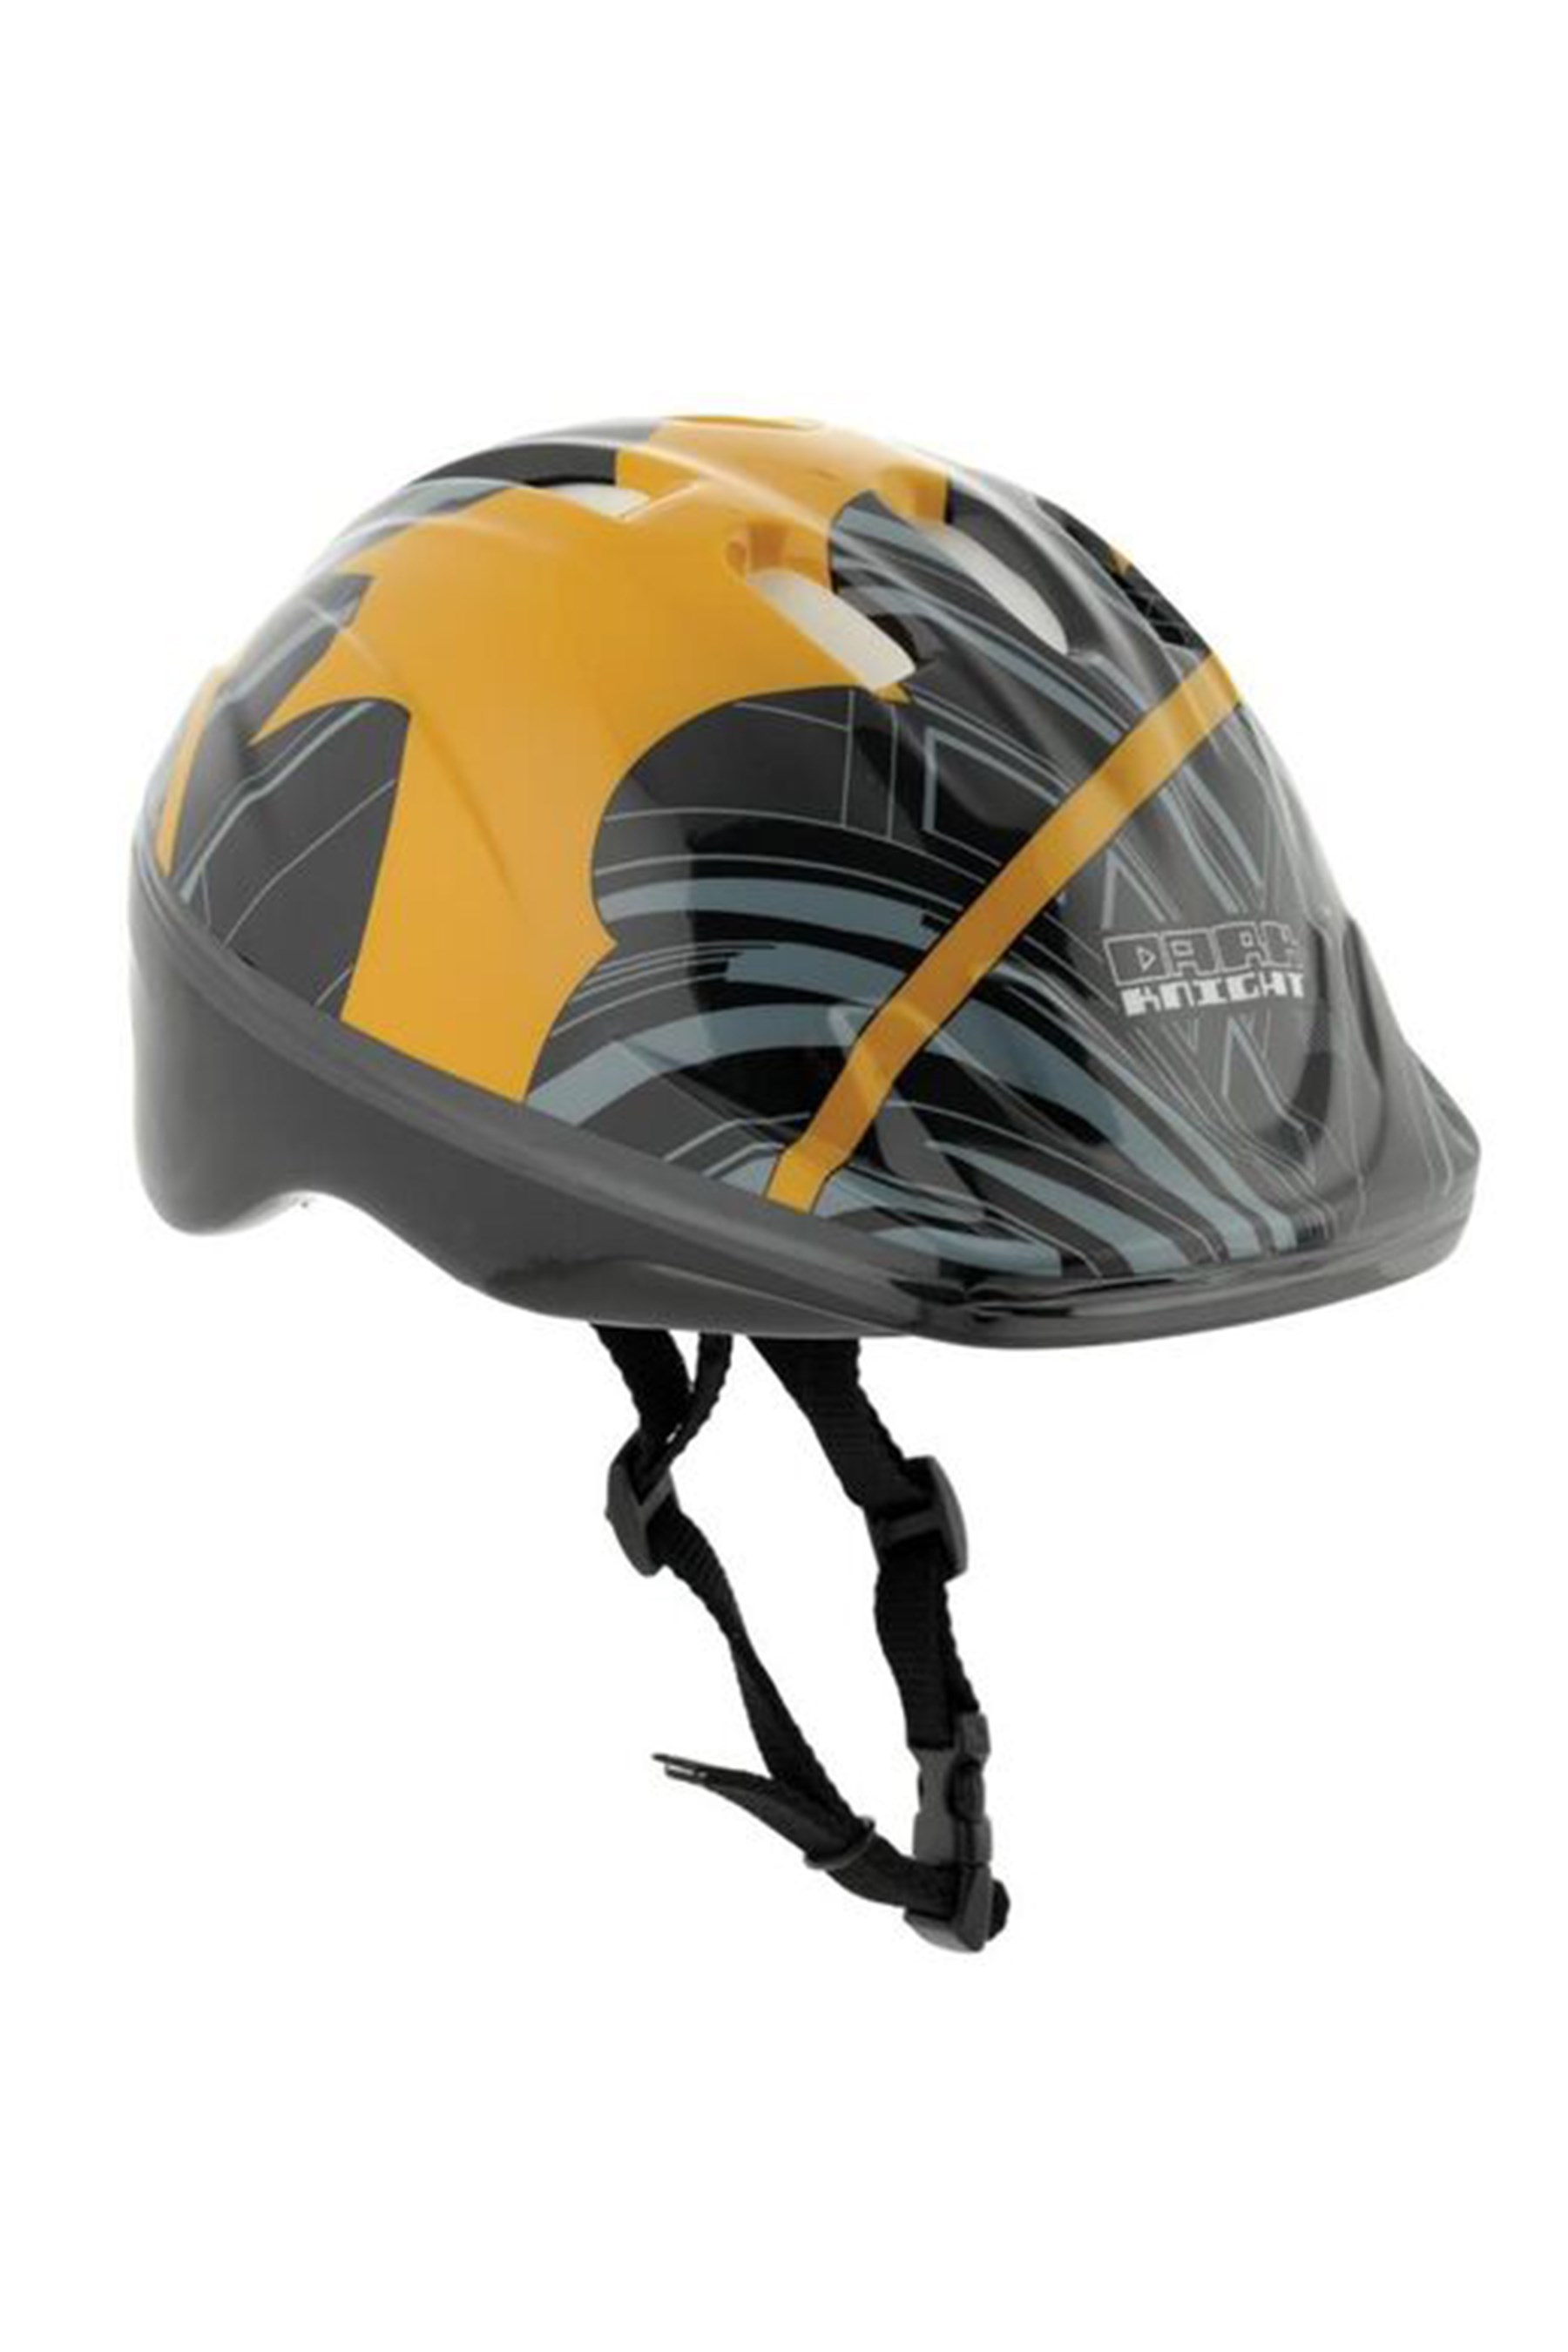 Batman Kids Safety Helmet 52-56cm -